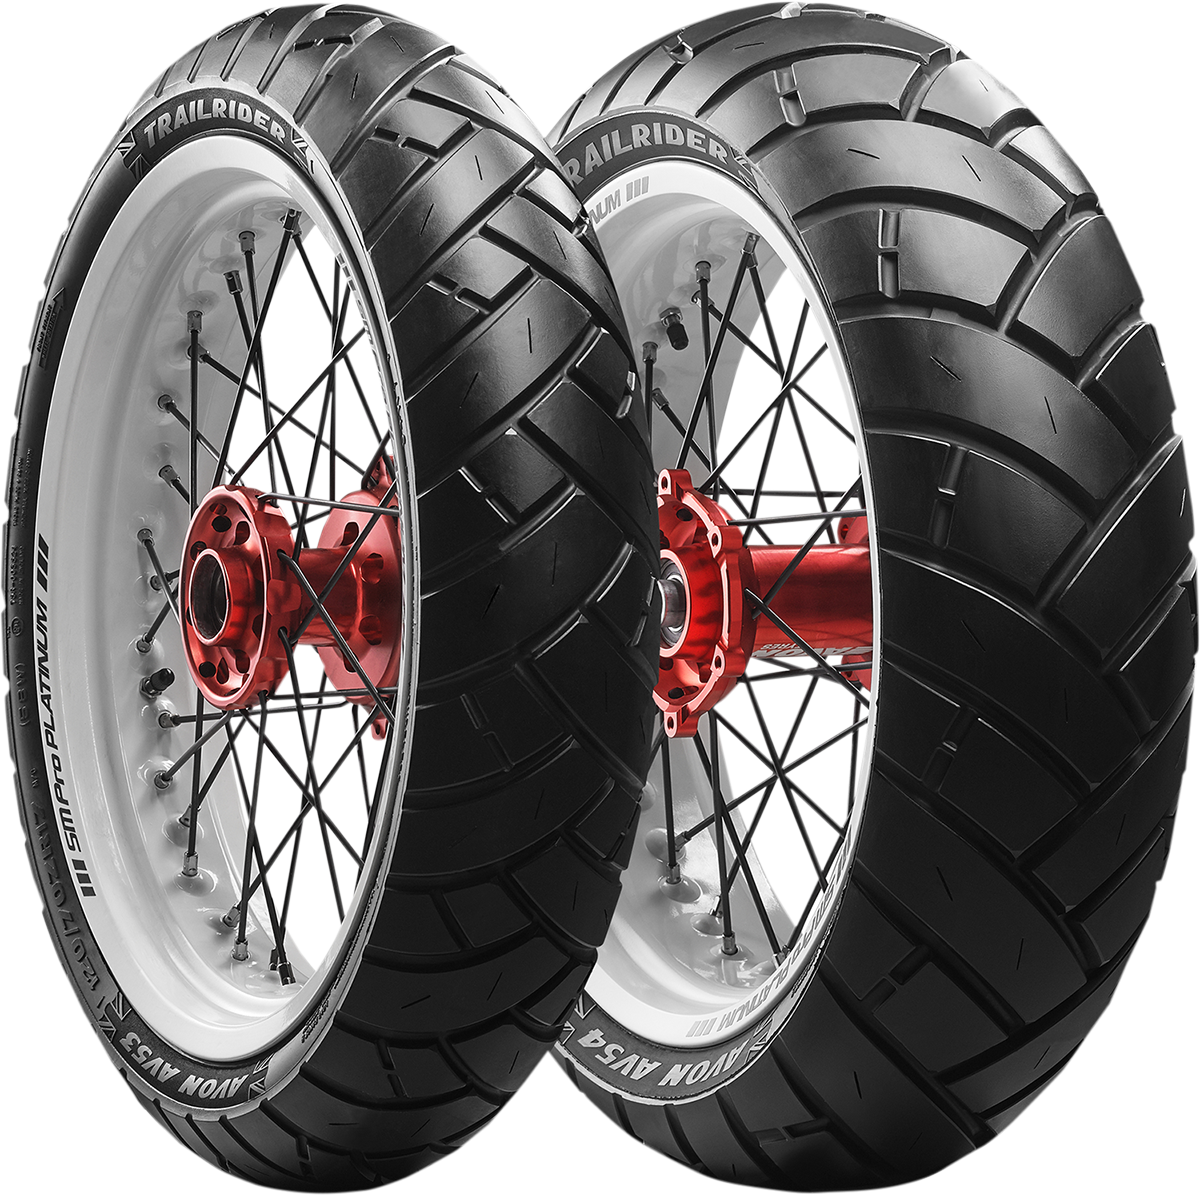 AVON Tire - Trailrider - Front - 120/70ZR17 - (58W) 638402